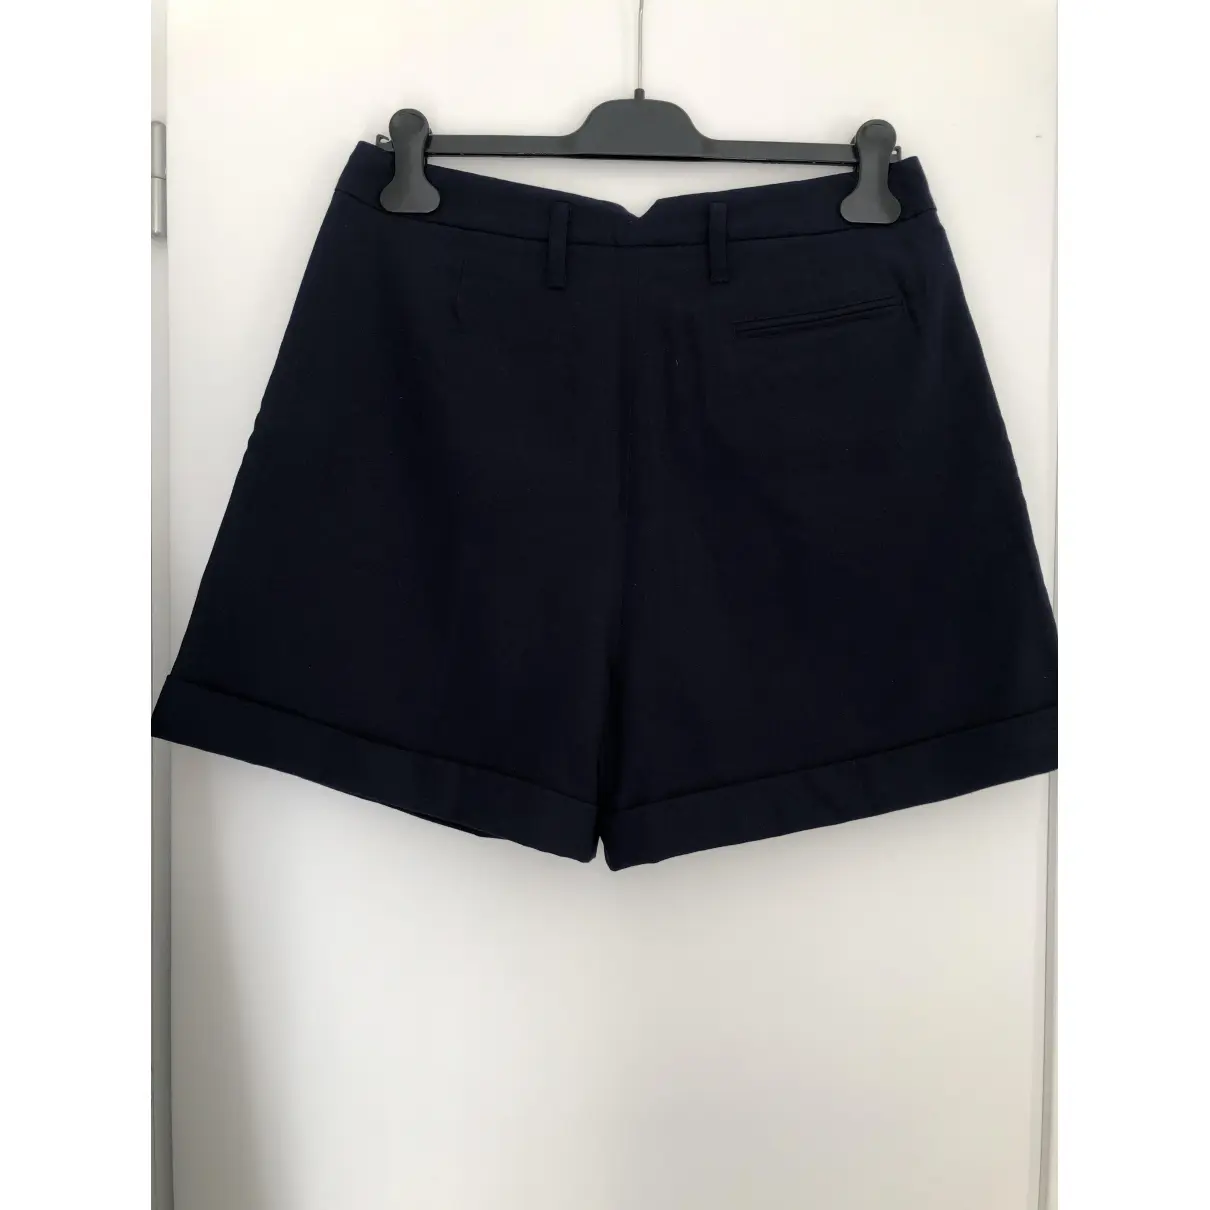 Buy Max & Co Blue Viscose Shorts online